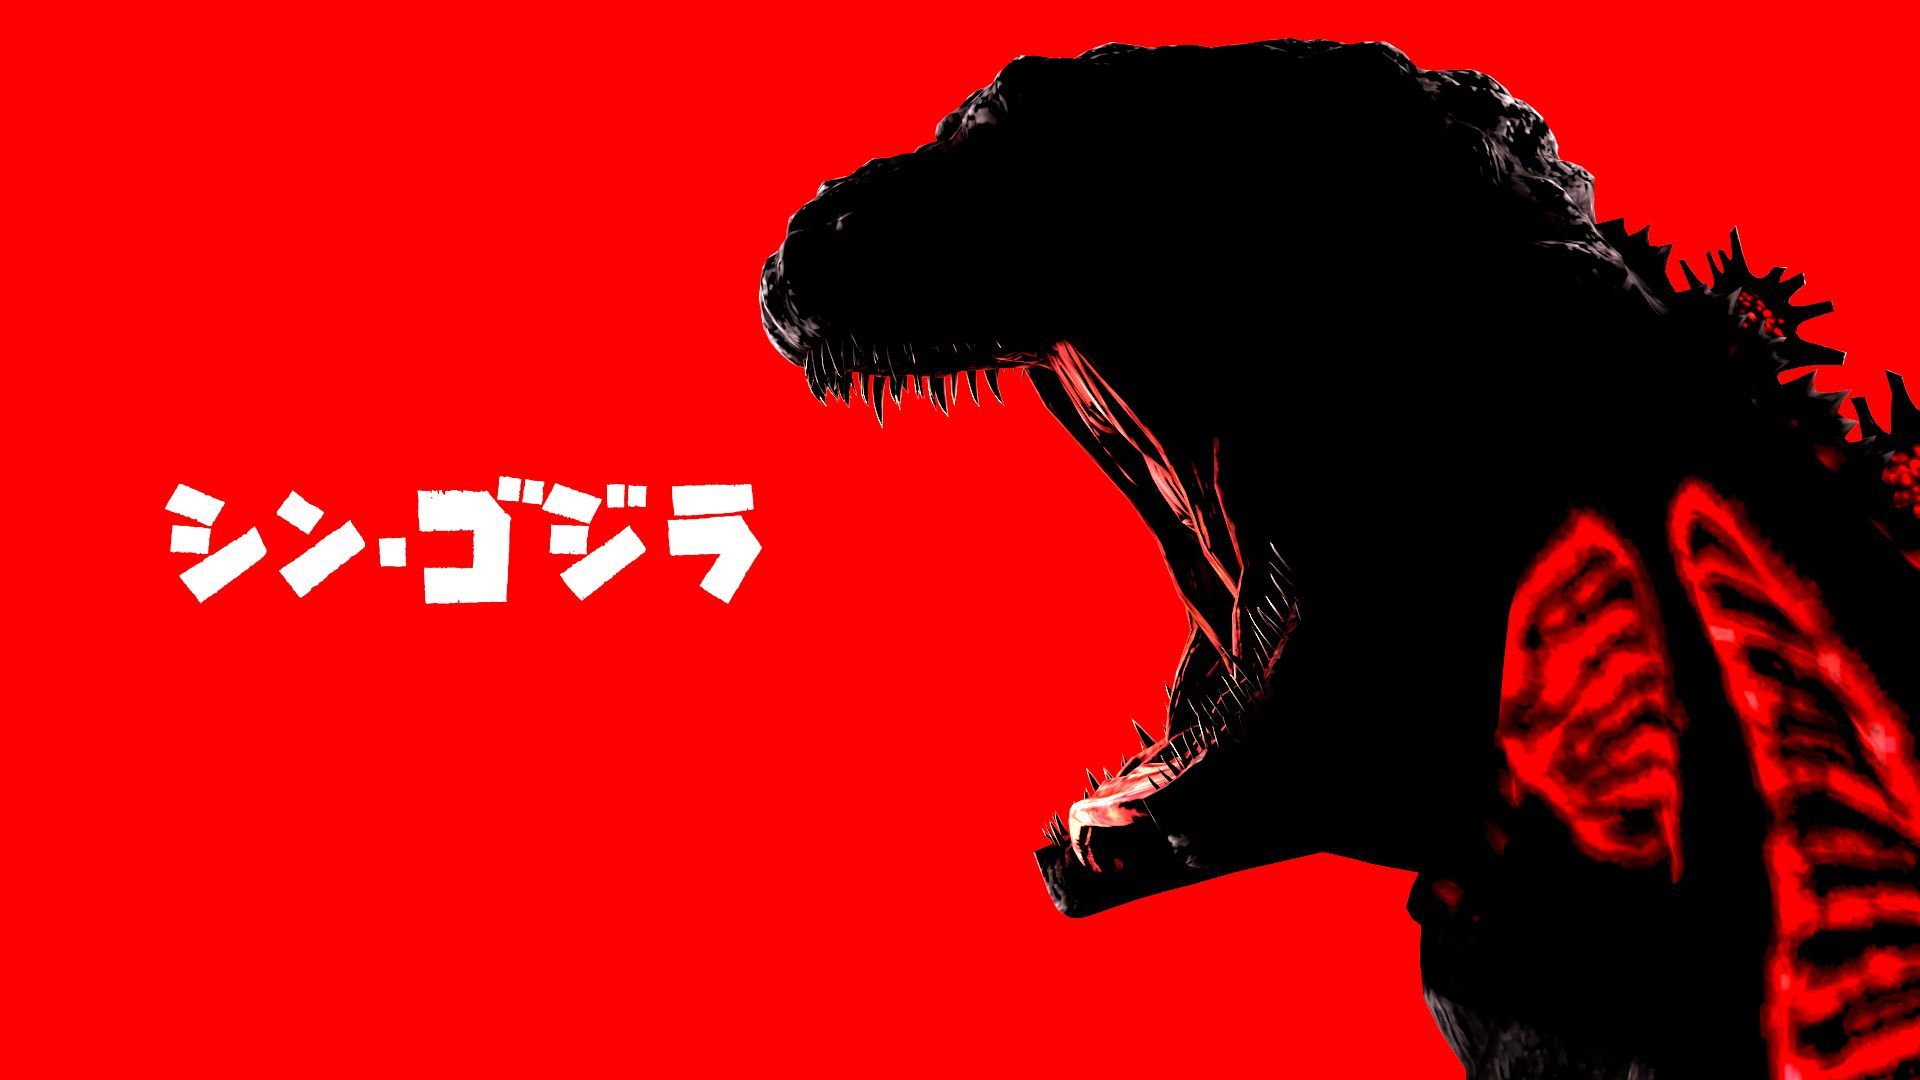 Shin Godzilla Silhouette [1920x1080]. Active wallpaper, Desktop background image, Background image